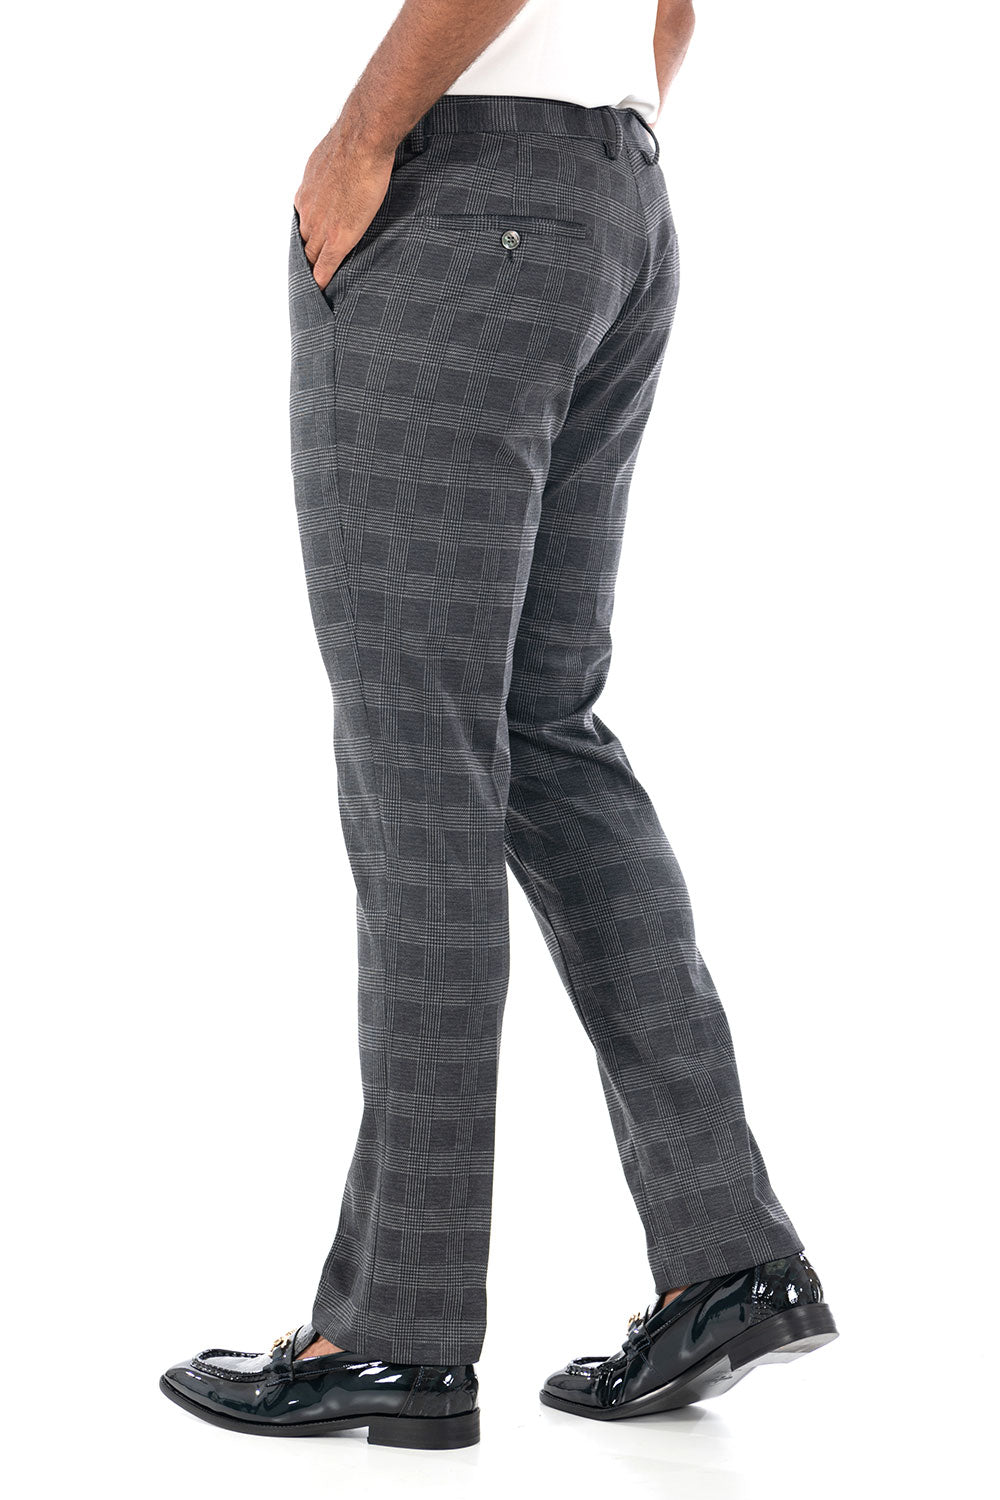 BARABAS men's checkered plaid charcoal black chino pants CP77